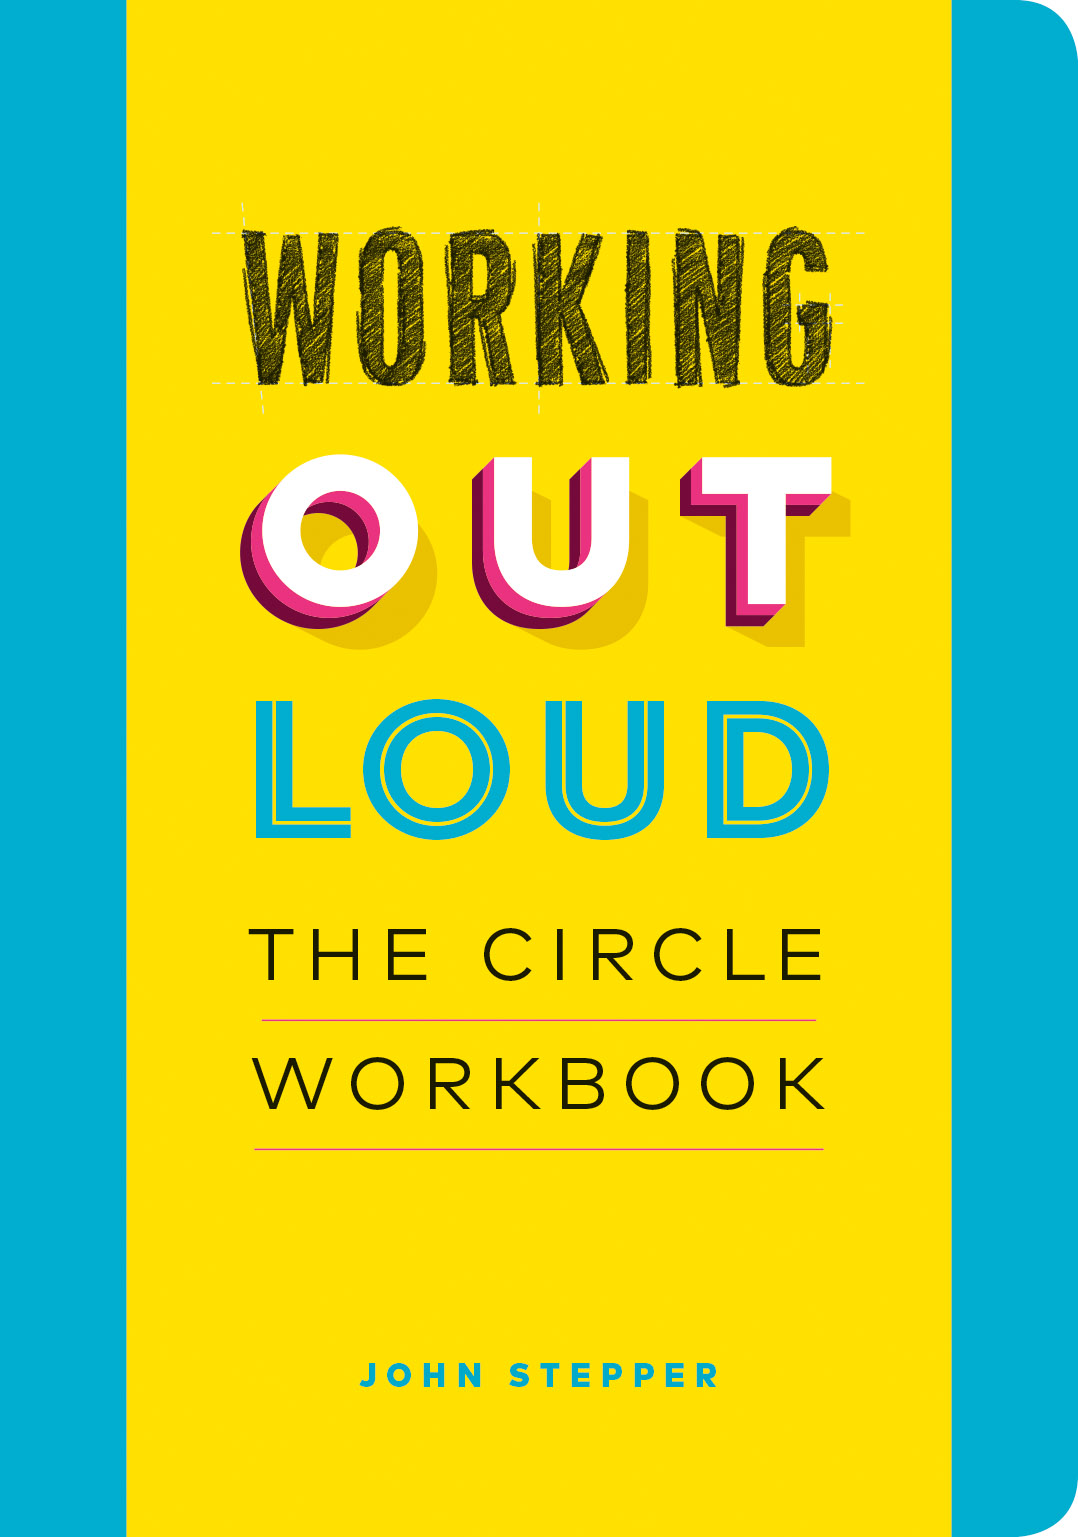 The Circle Workbook